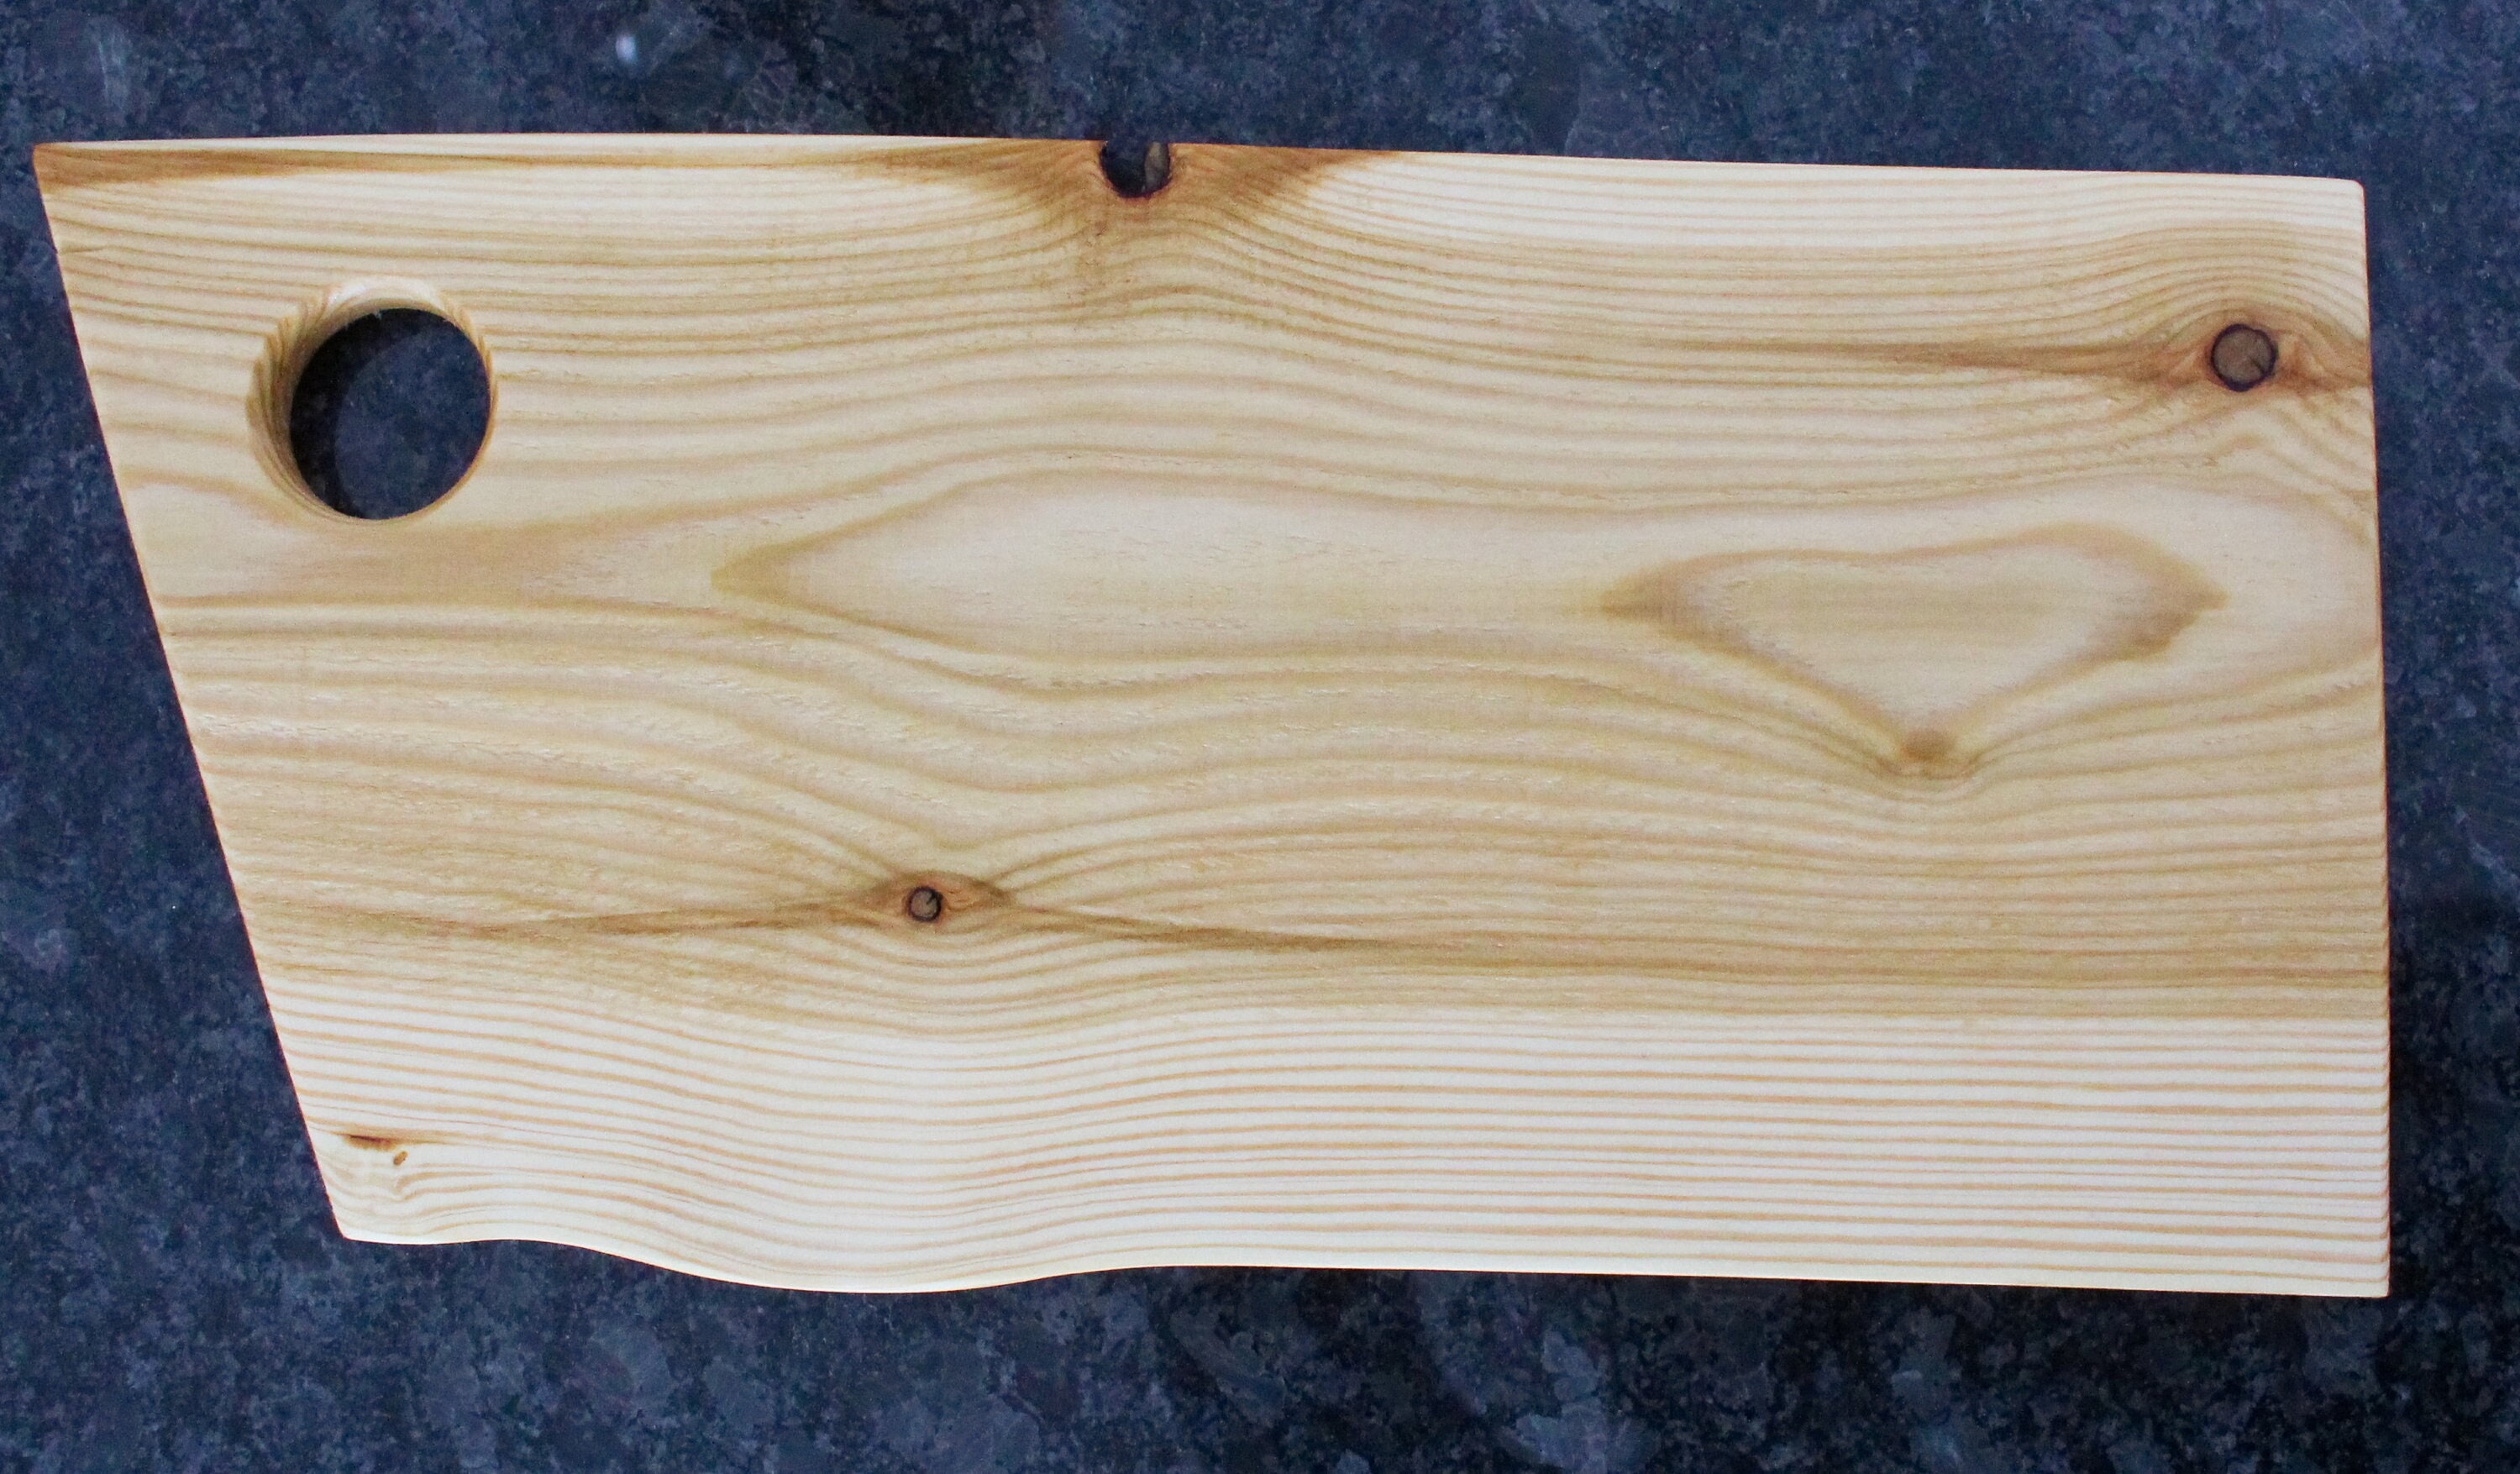 Larch Wood Large Classic End Grain Cutting Board 21.5 x 13.5 x 1.75